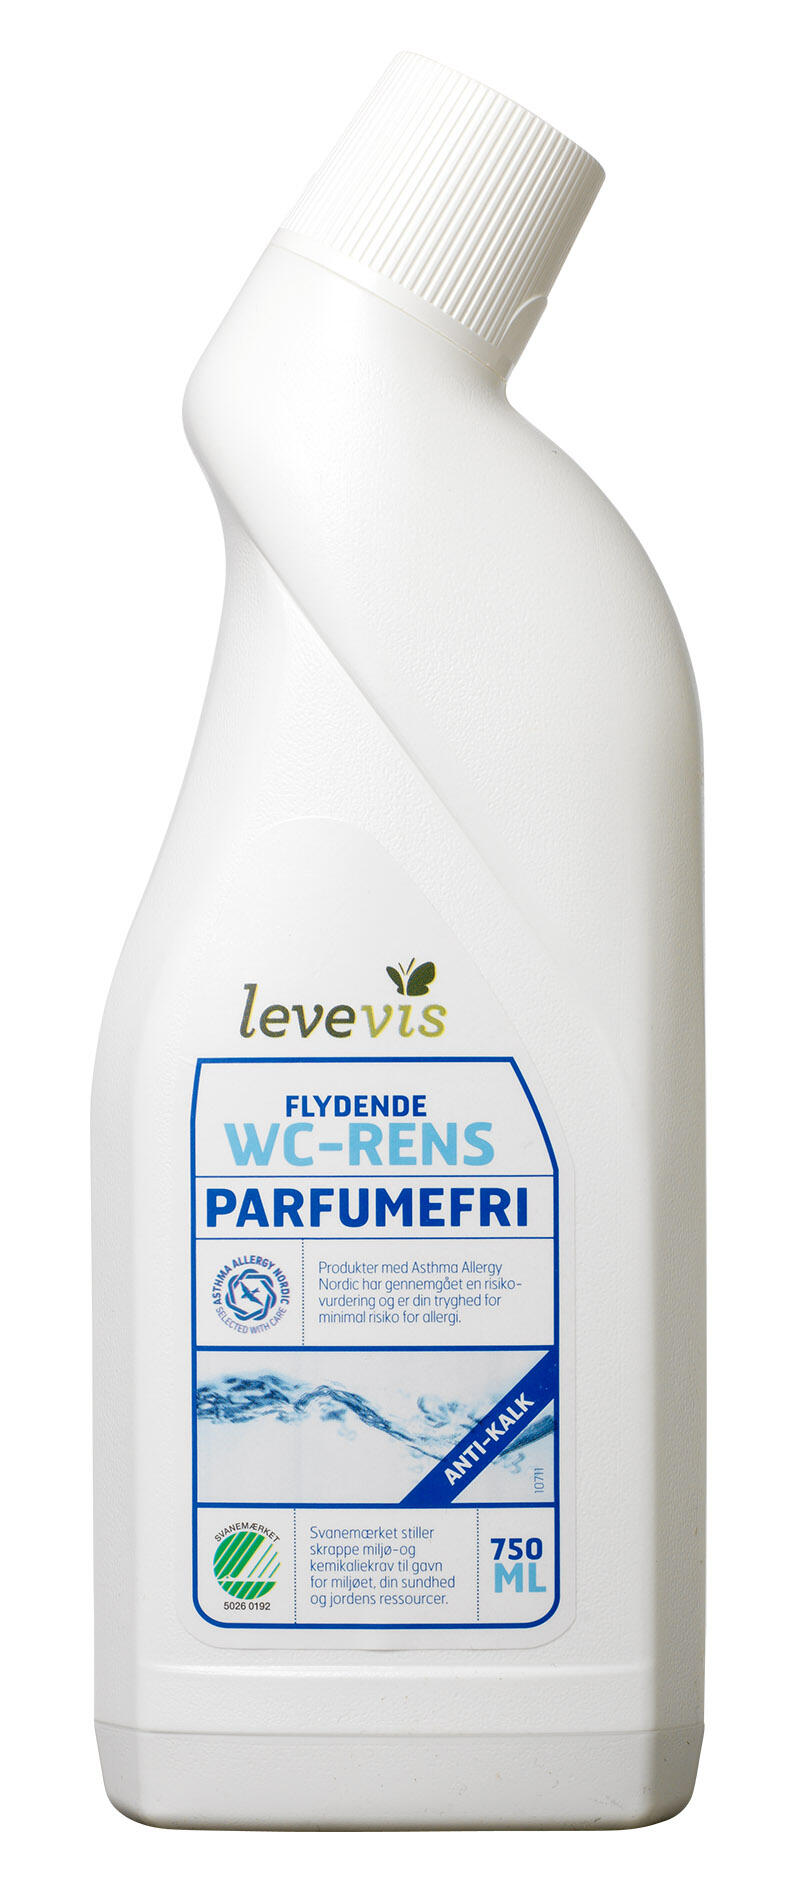 WC-rens parfumefri Levevis